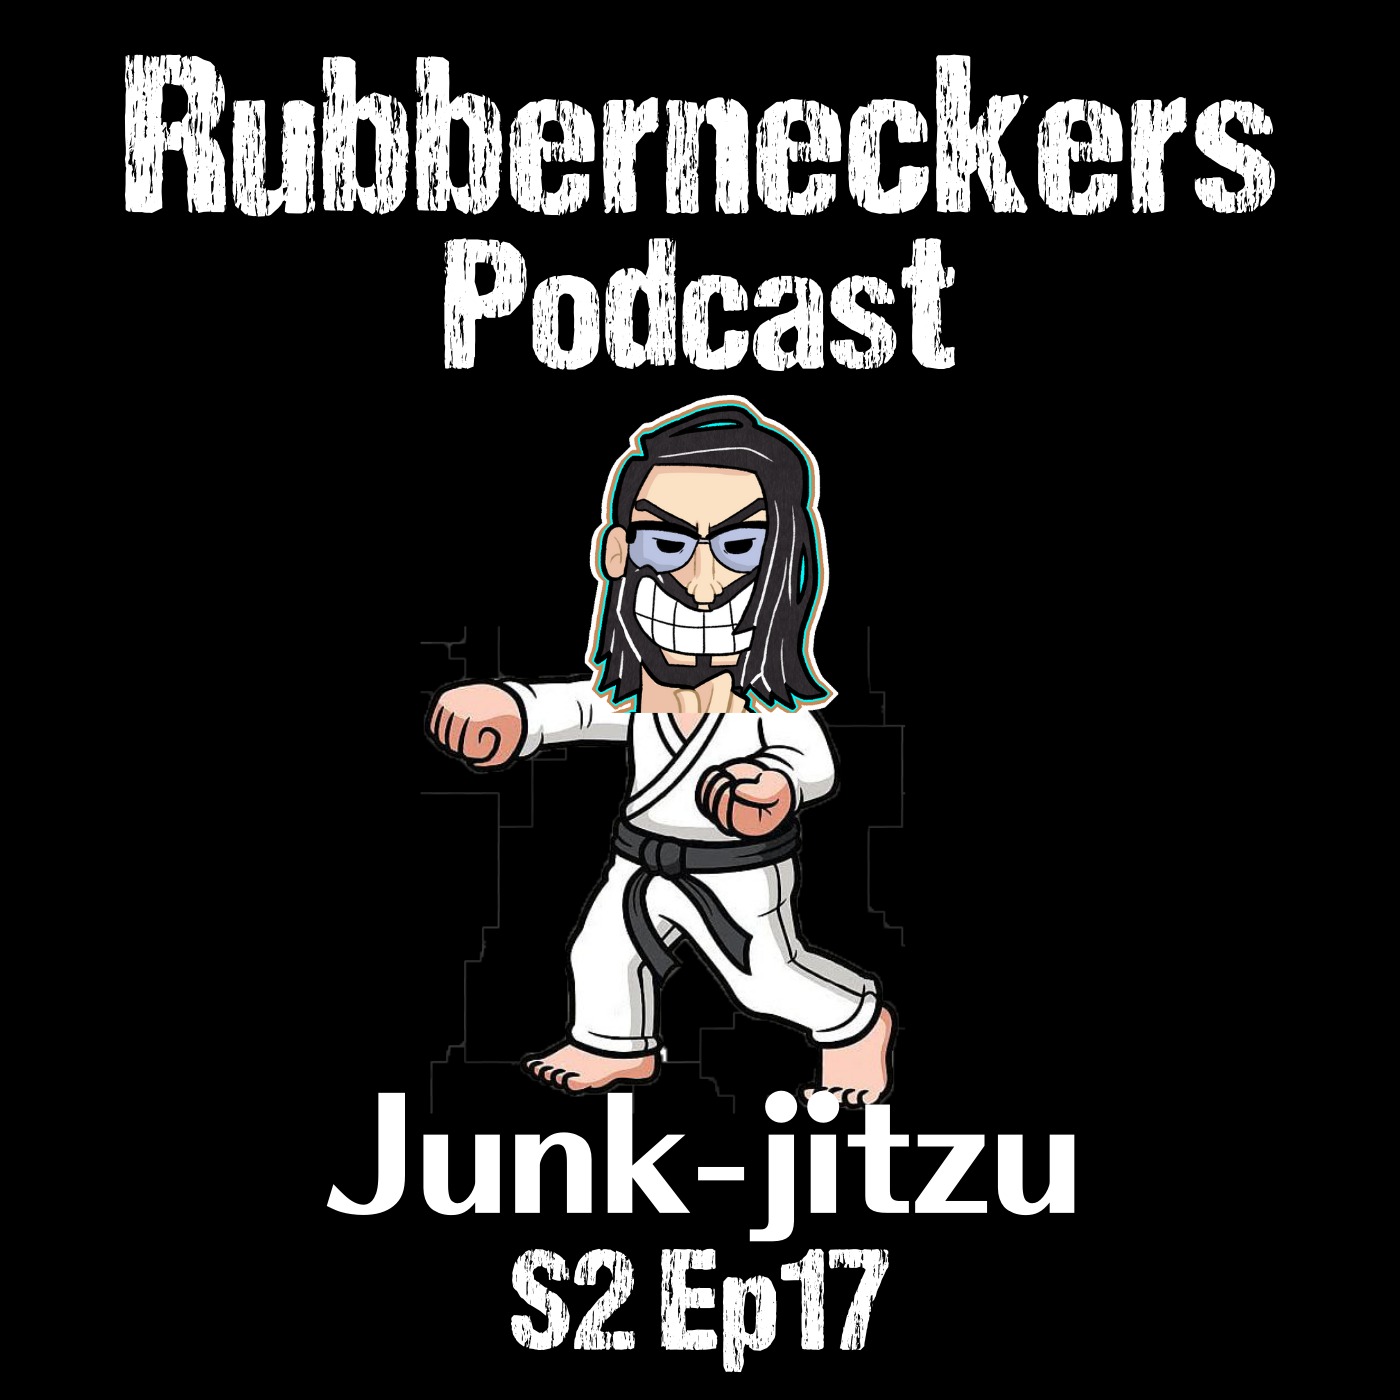 Junk-jitzu | S2 E17 Image